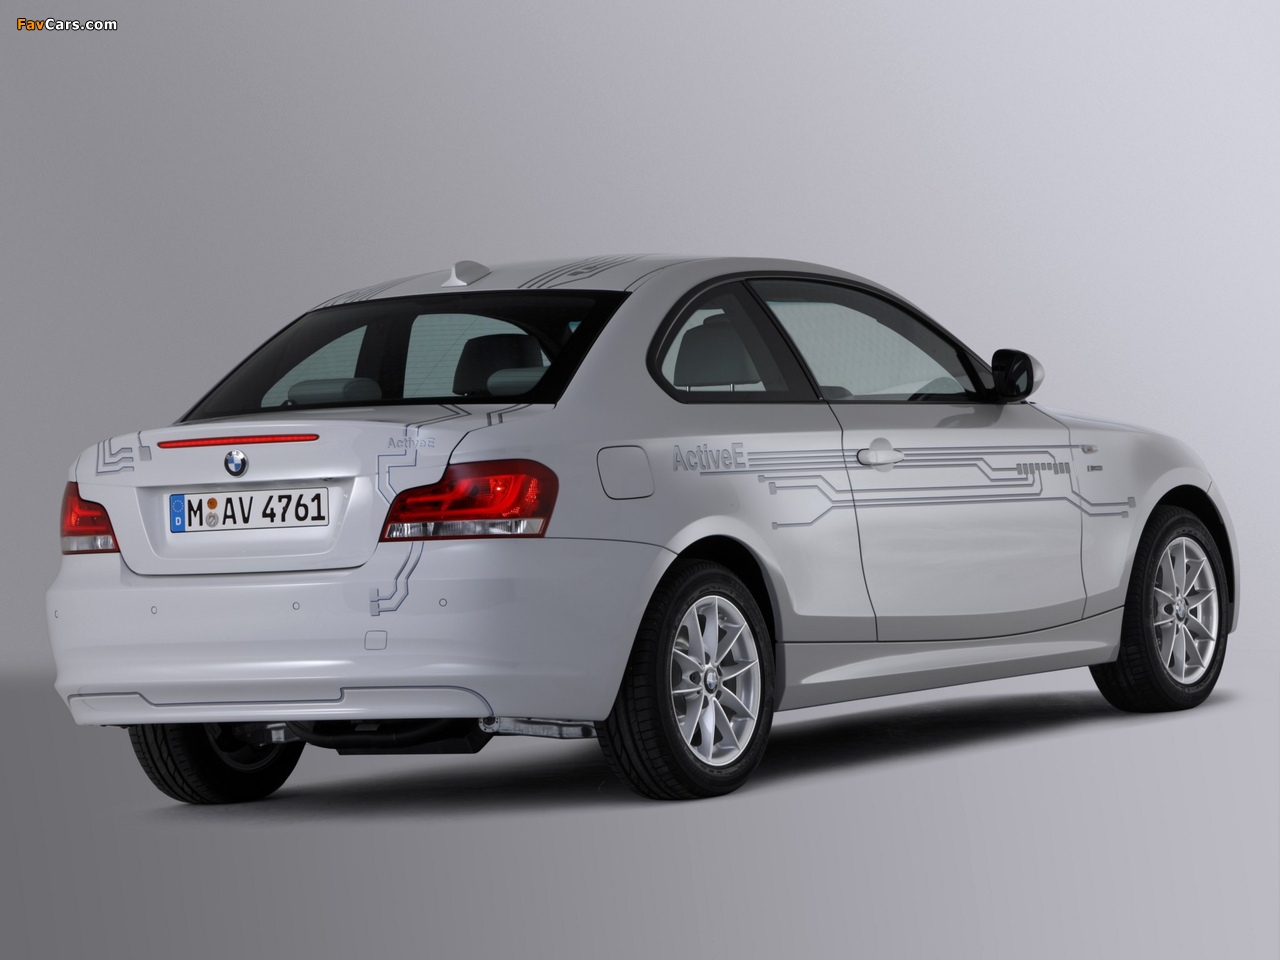 BMW 1 Series Coupe ActiveE Test Car (E82) 2011 images (1280 x 960)